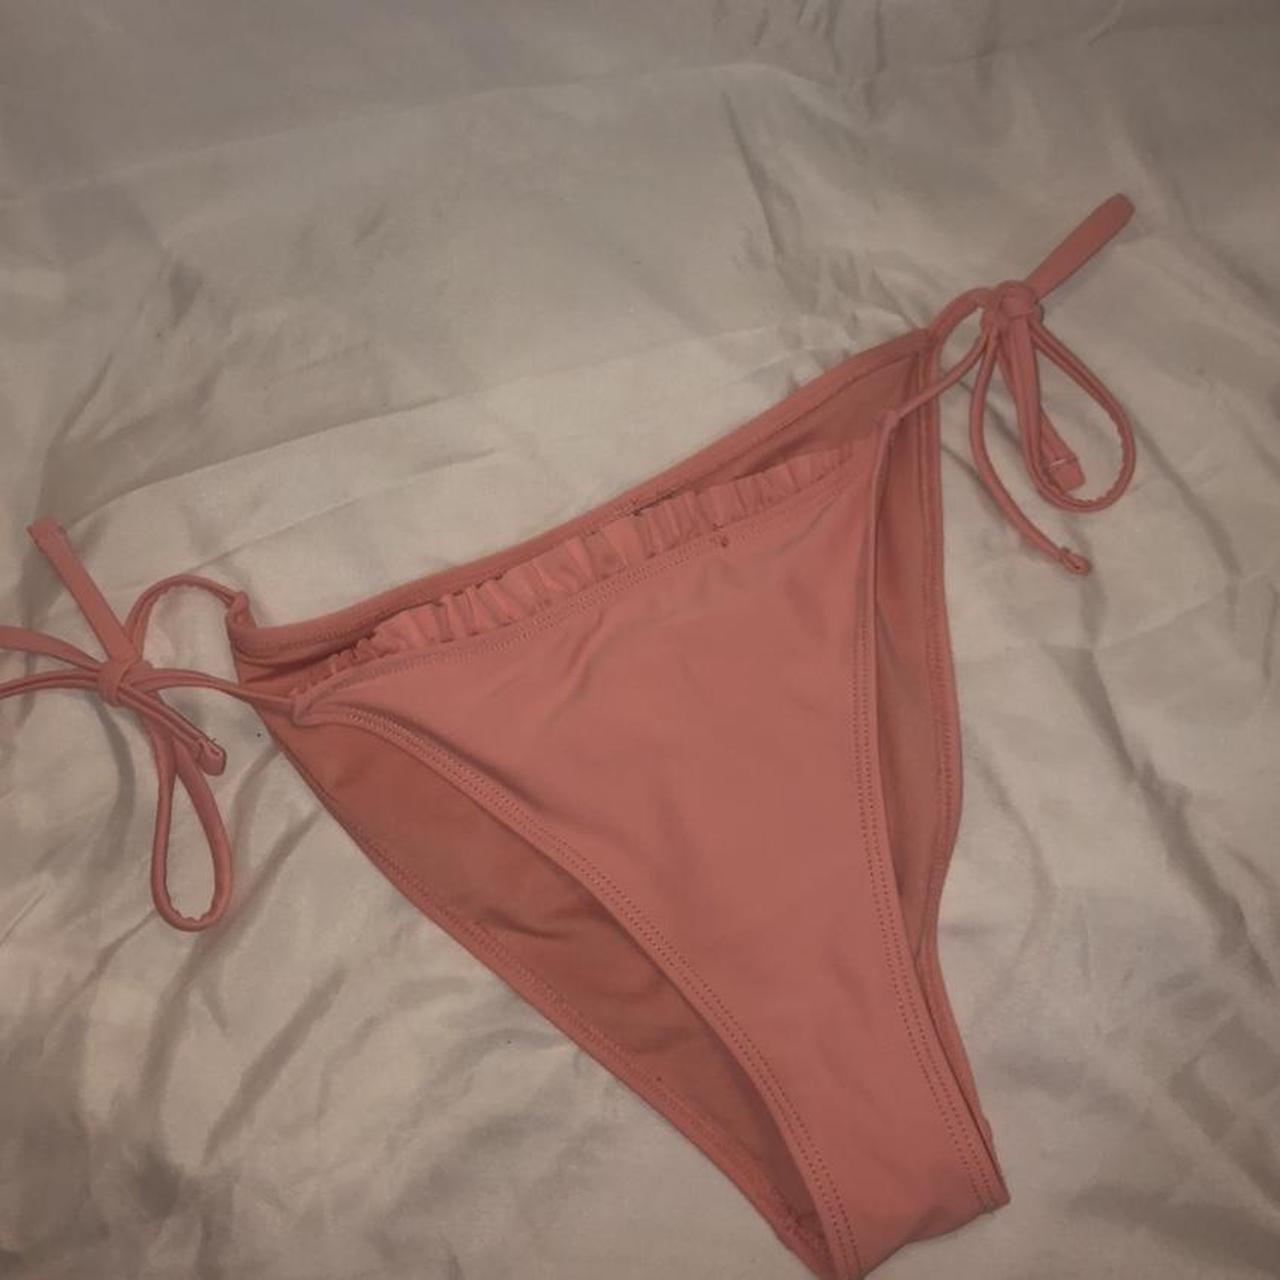 Product Image 1 - bikini bottoms peachish pinkish color,